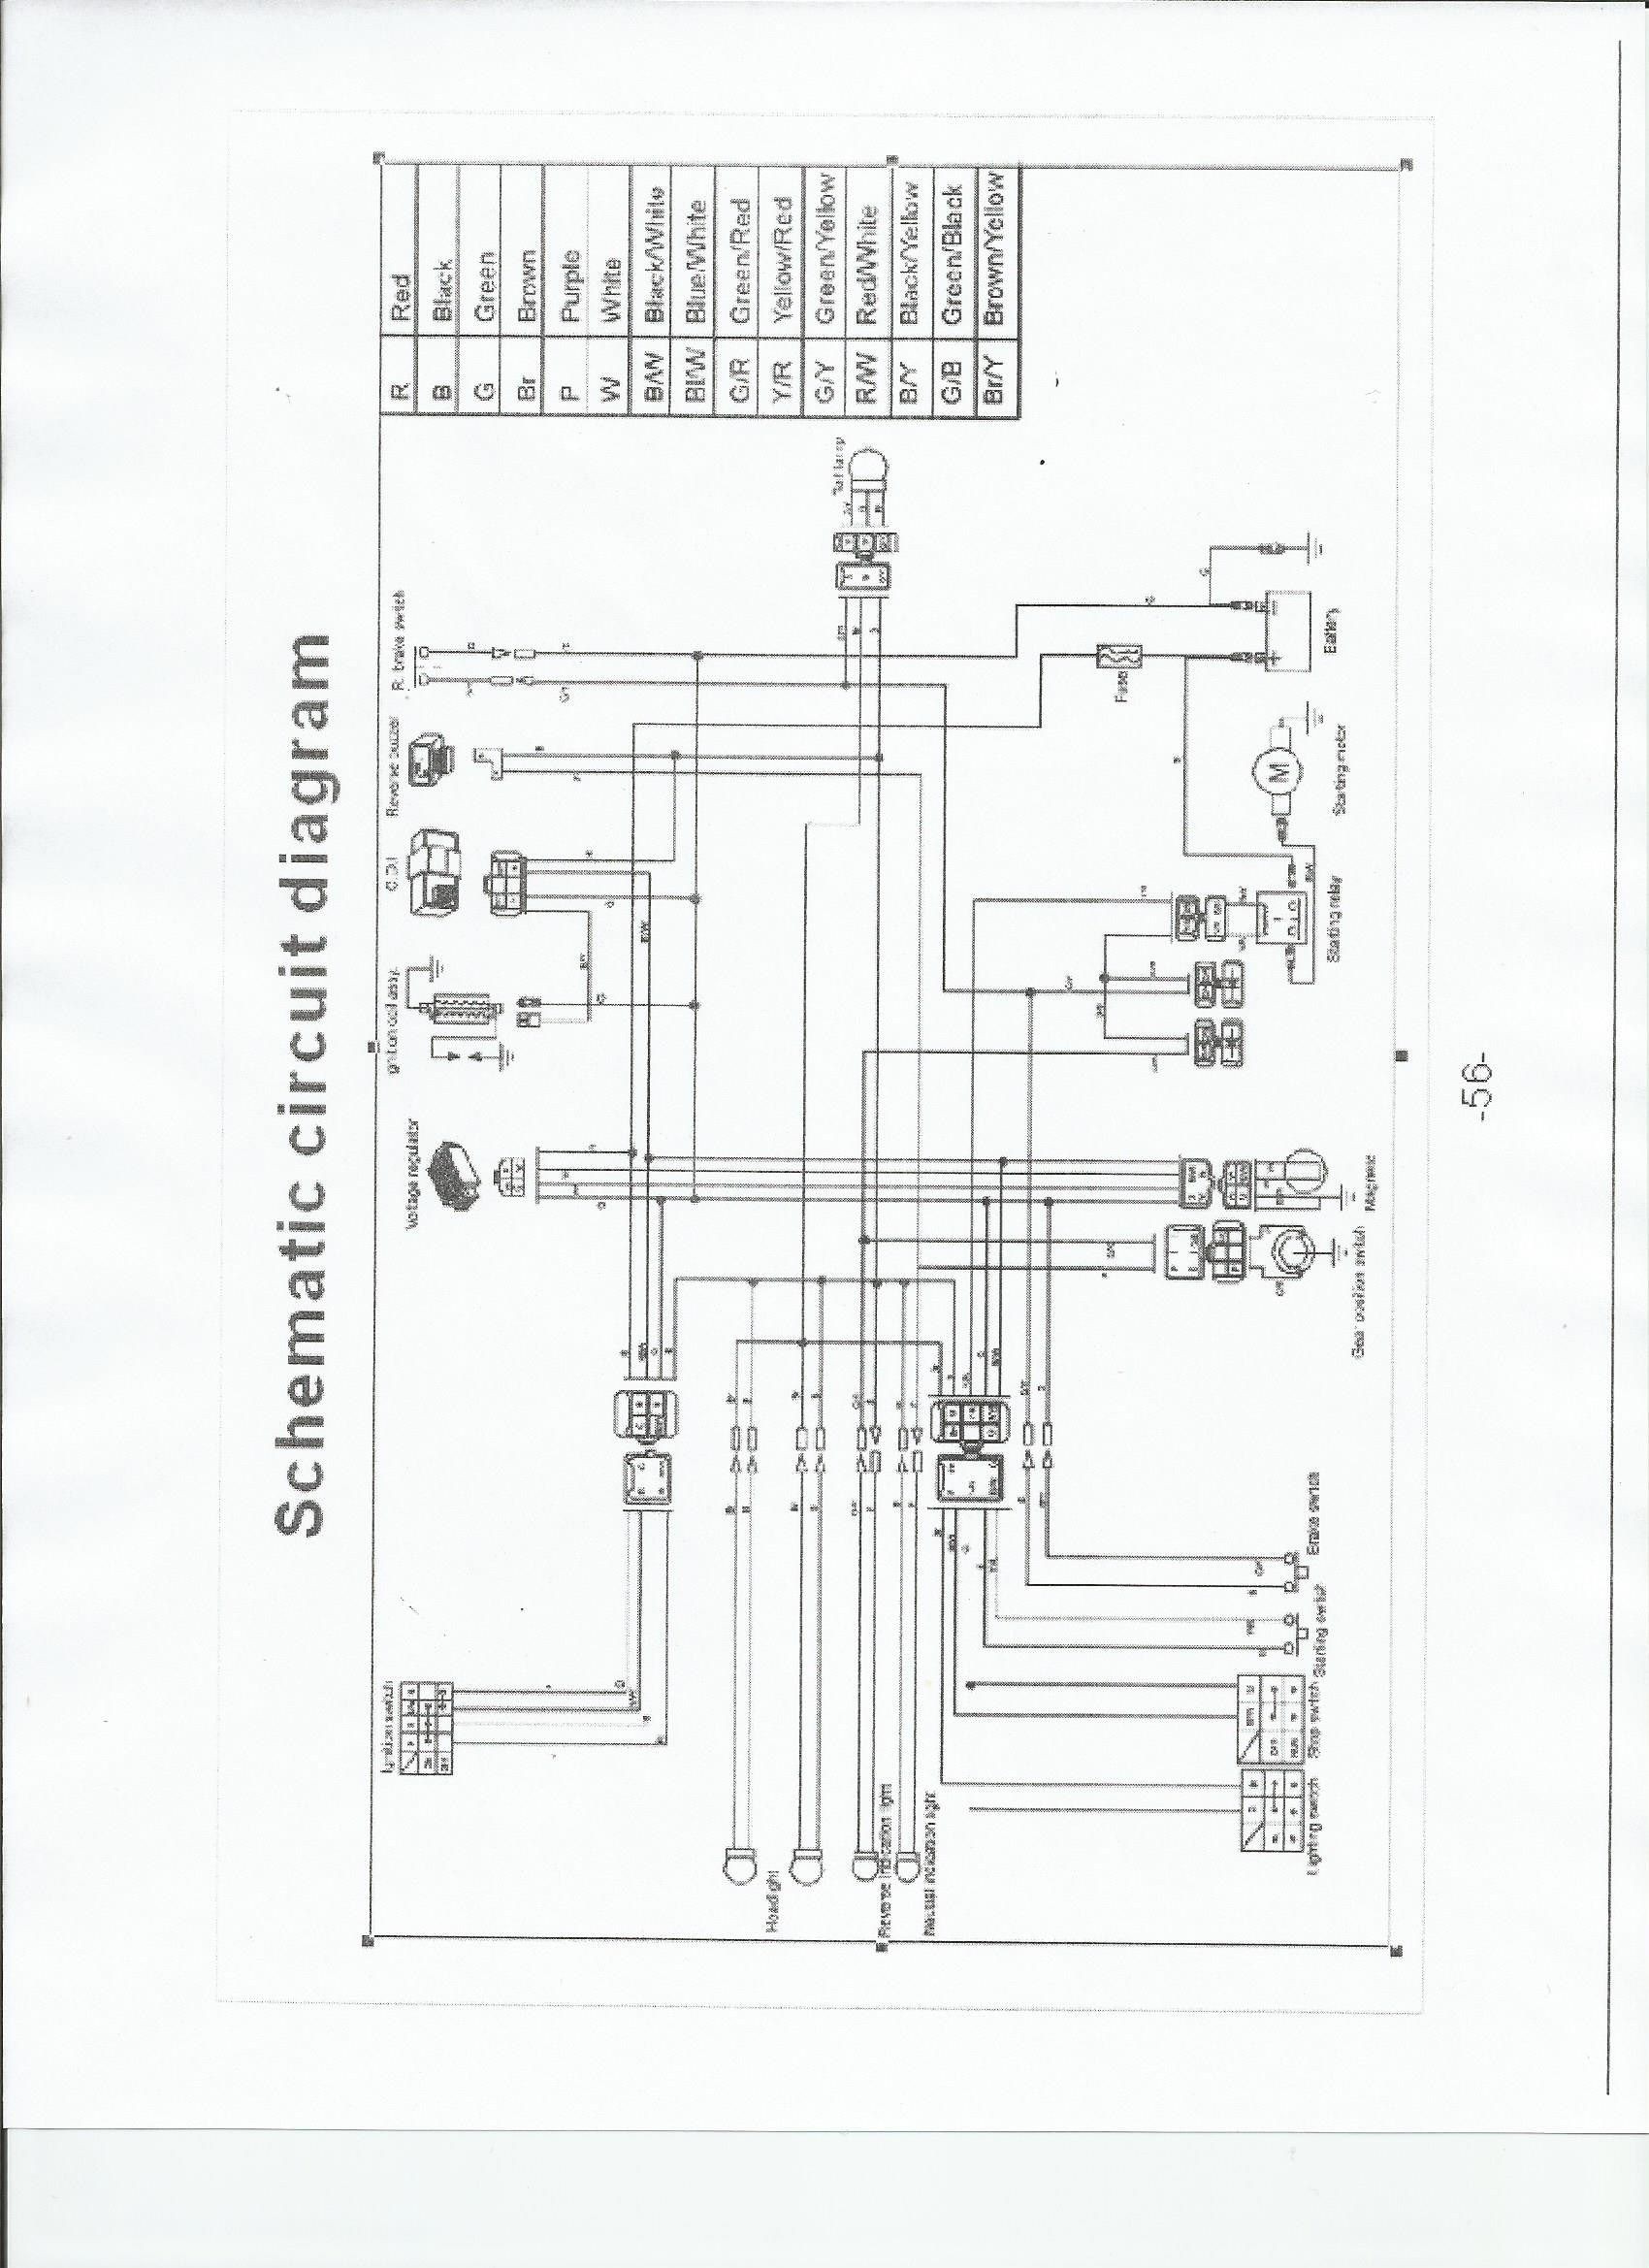 Chinese Quad Electrical Diagram Chinese Quad Wiring Diagram Of Chinese Quad Electrical Diagram